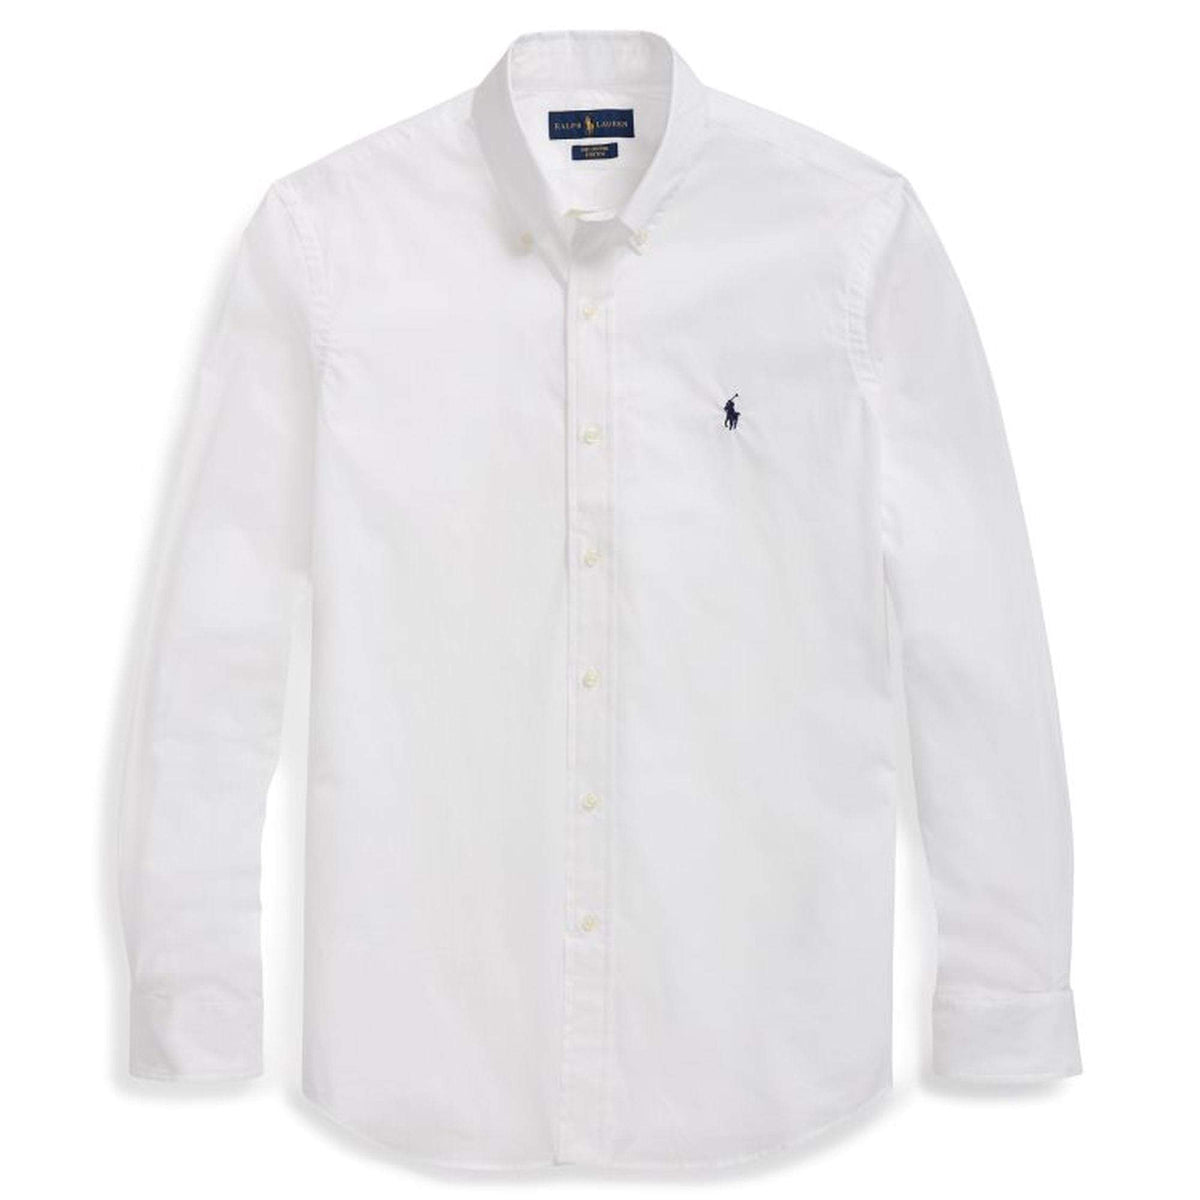 Polo Ralph Lauren - Shirts - Polo Ralph Lauren White Poplin Shirt